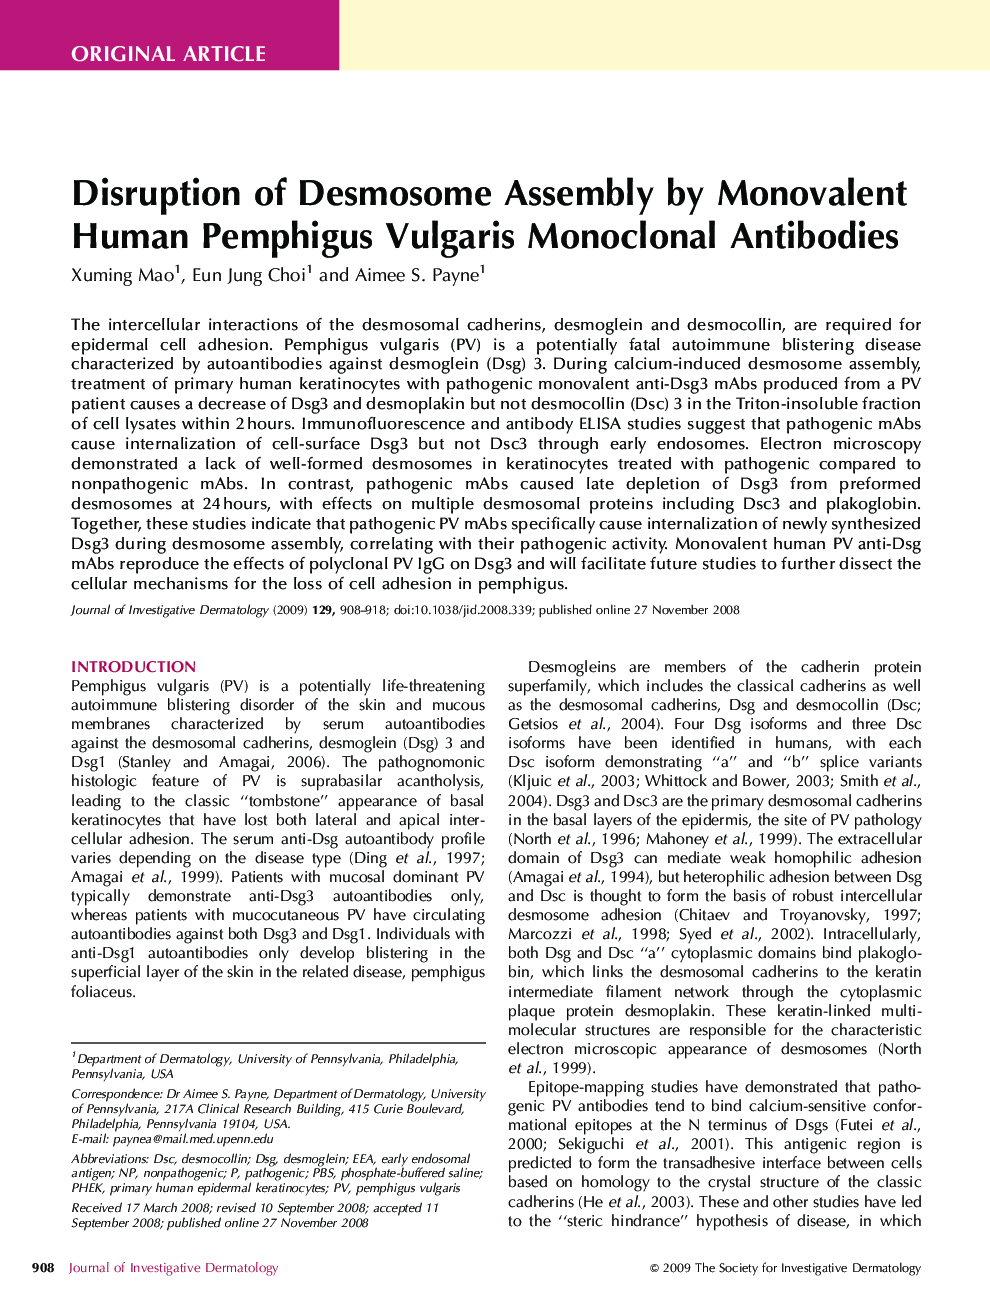 Disruption of Desmosome Assembly by Monovalent Human Pemphigus Vulgaris Monoclonal Antibodies 